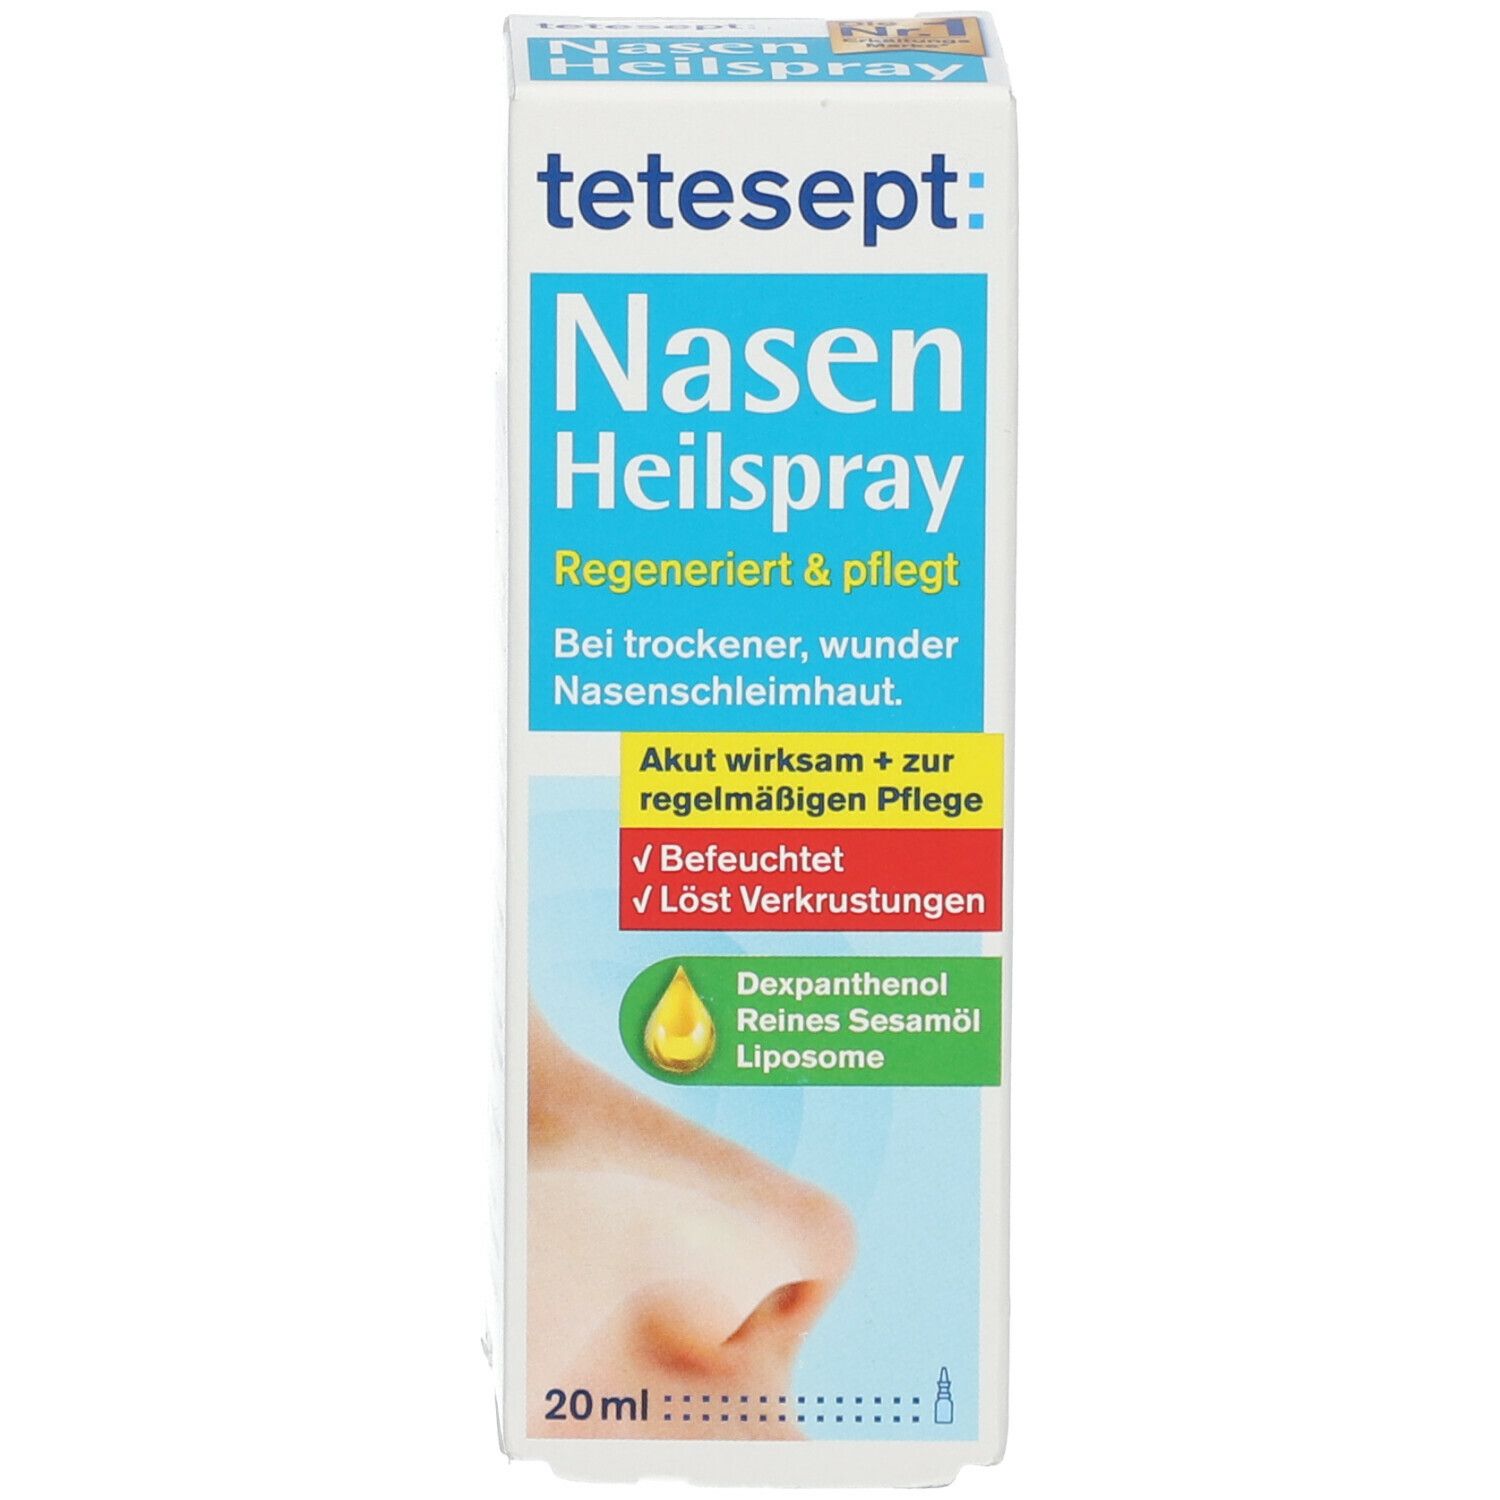 tetesept® Nasen Heilspray